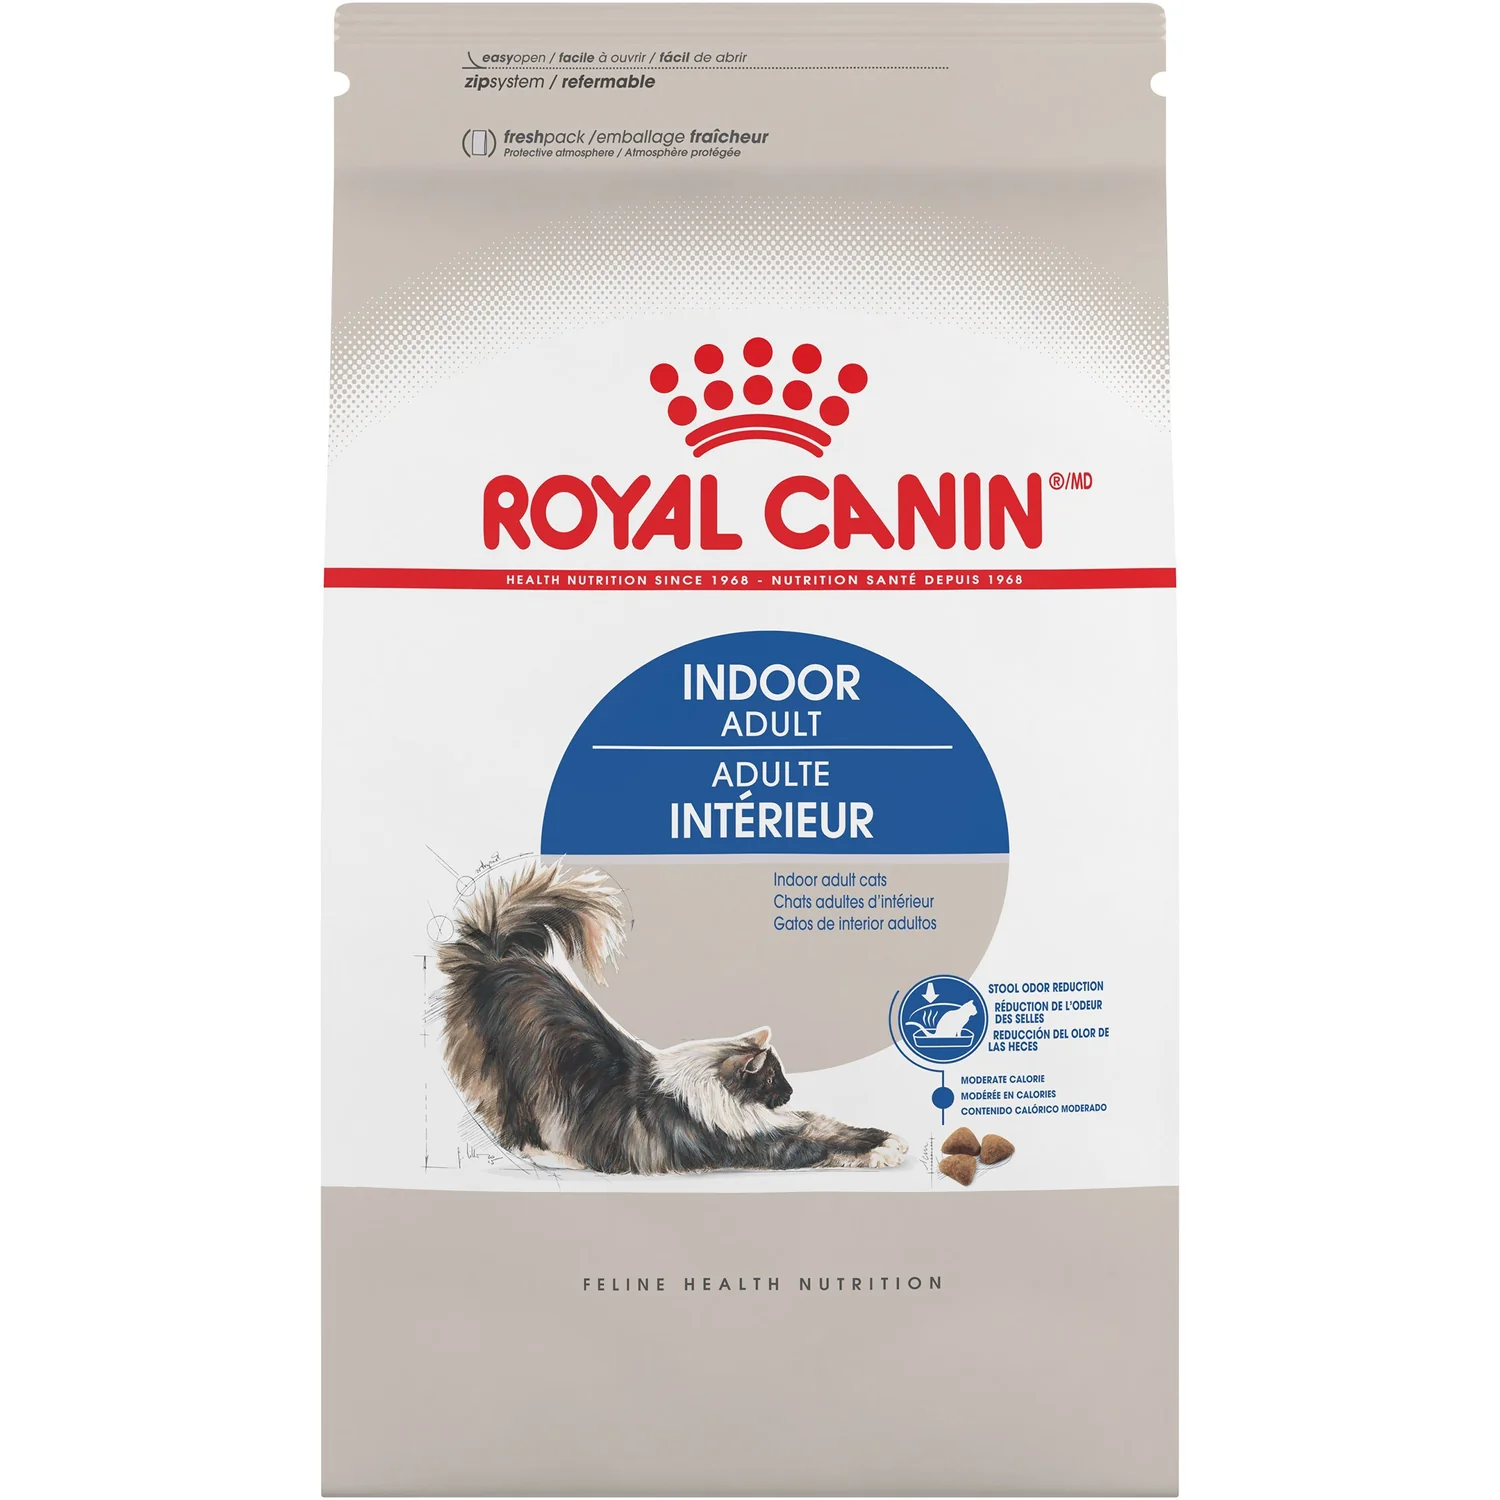 Royal Canin – Feline Health Nutrition Indoor Adult Dry Cat Food